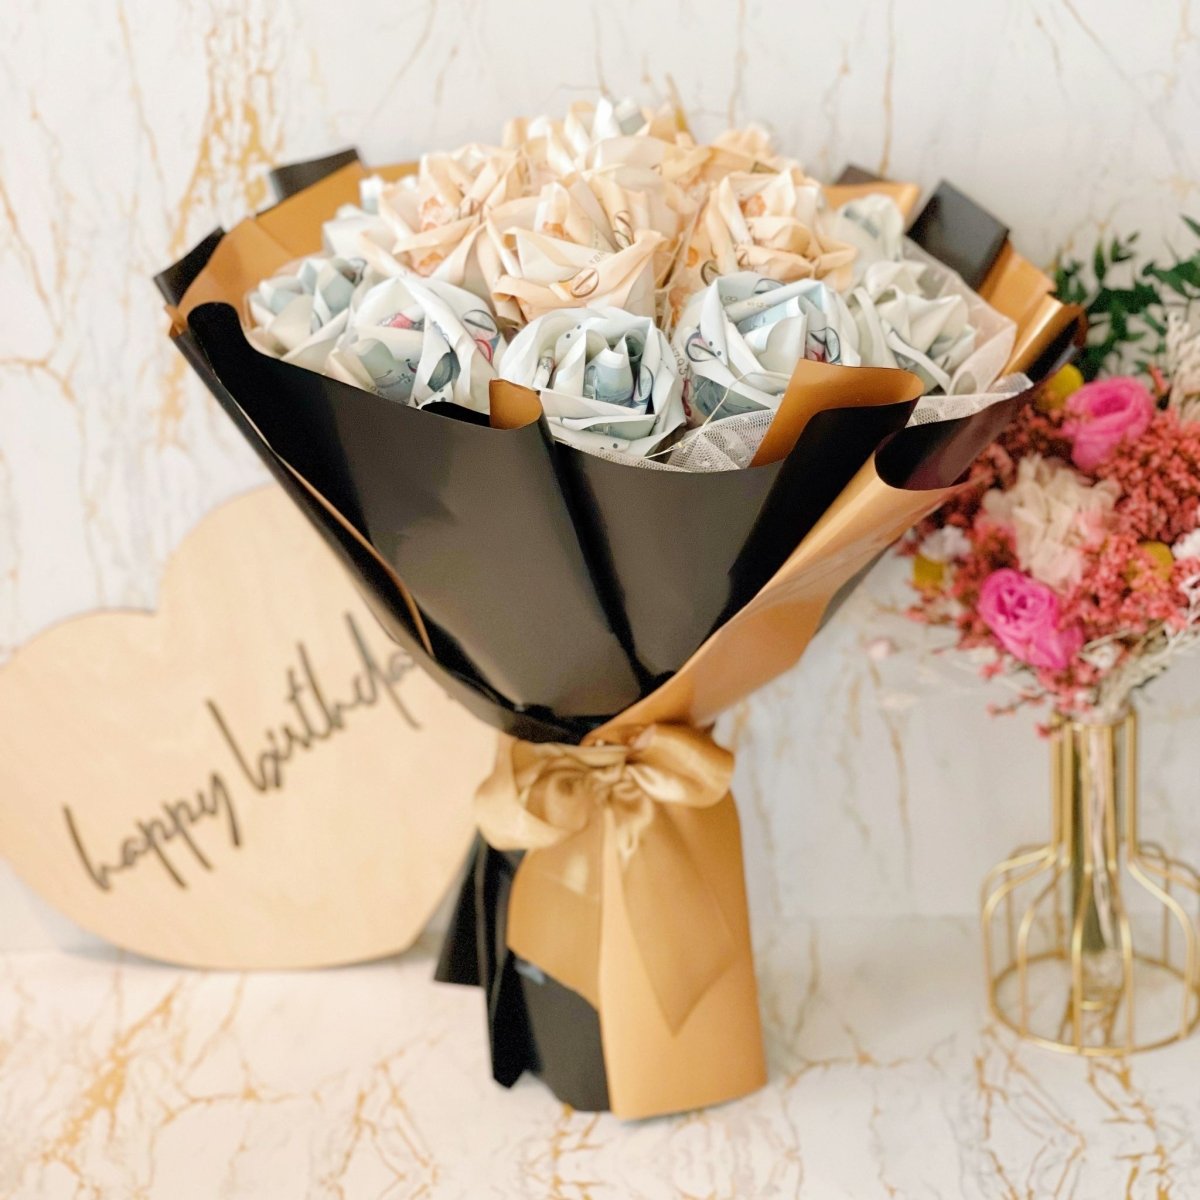 Thousand Roses - Money Bouquet ($5200, Cash not Inclusive)(7 days pre-order) - Rainbowly Fresh Fruit Gift and Flower Arrangments